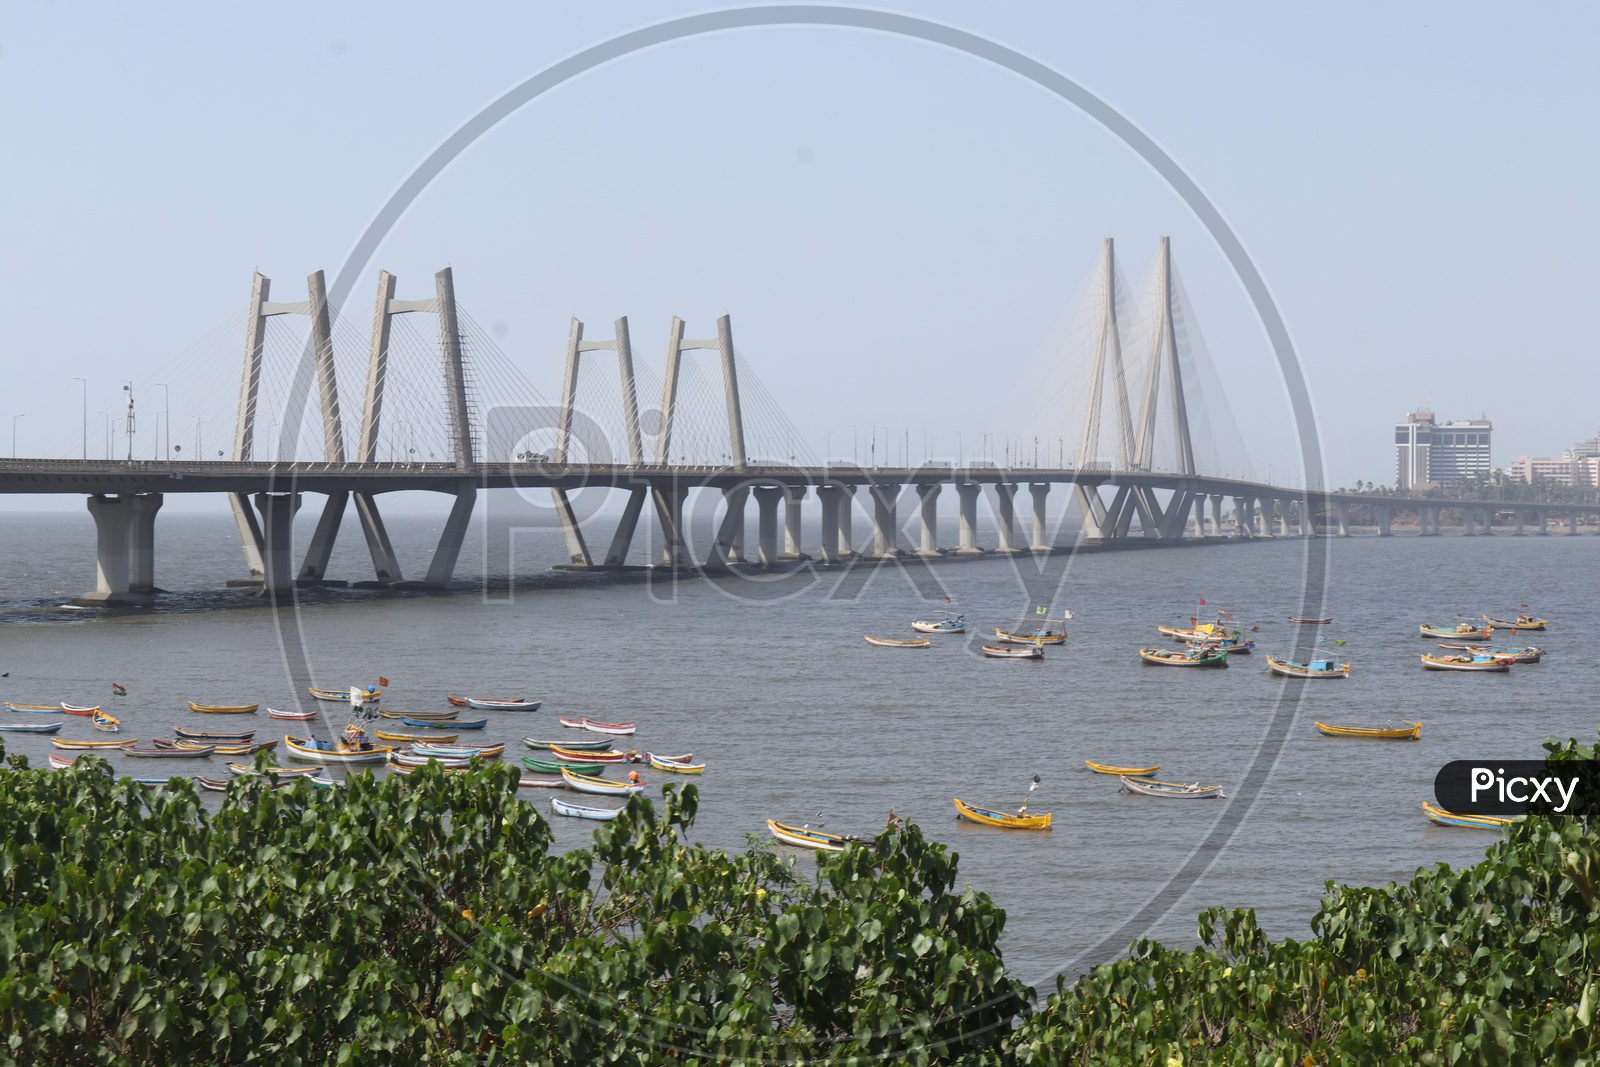 small boats sailing in Arabian sea with Mumbai Bridge in background